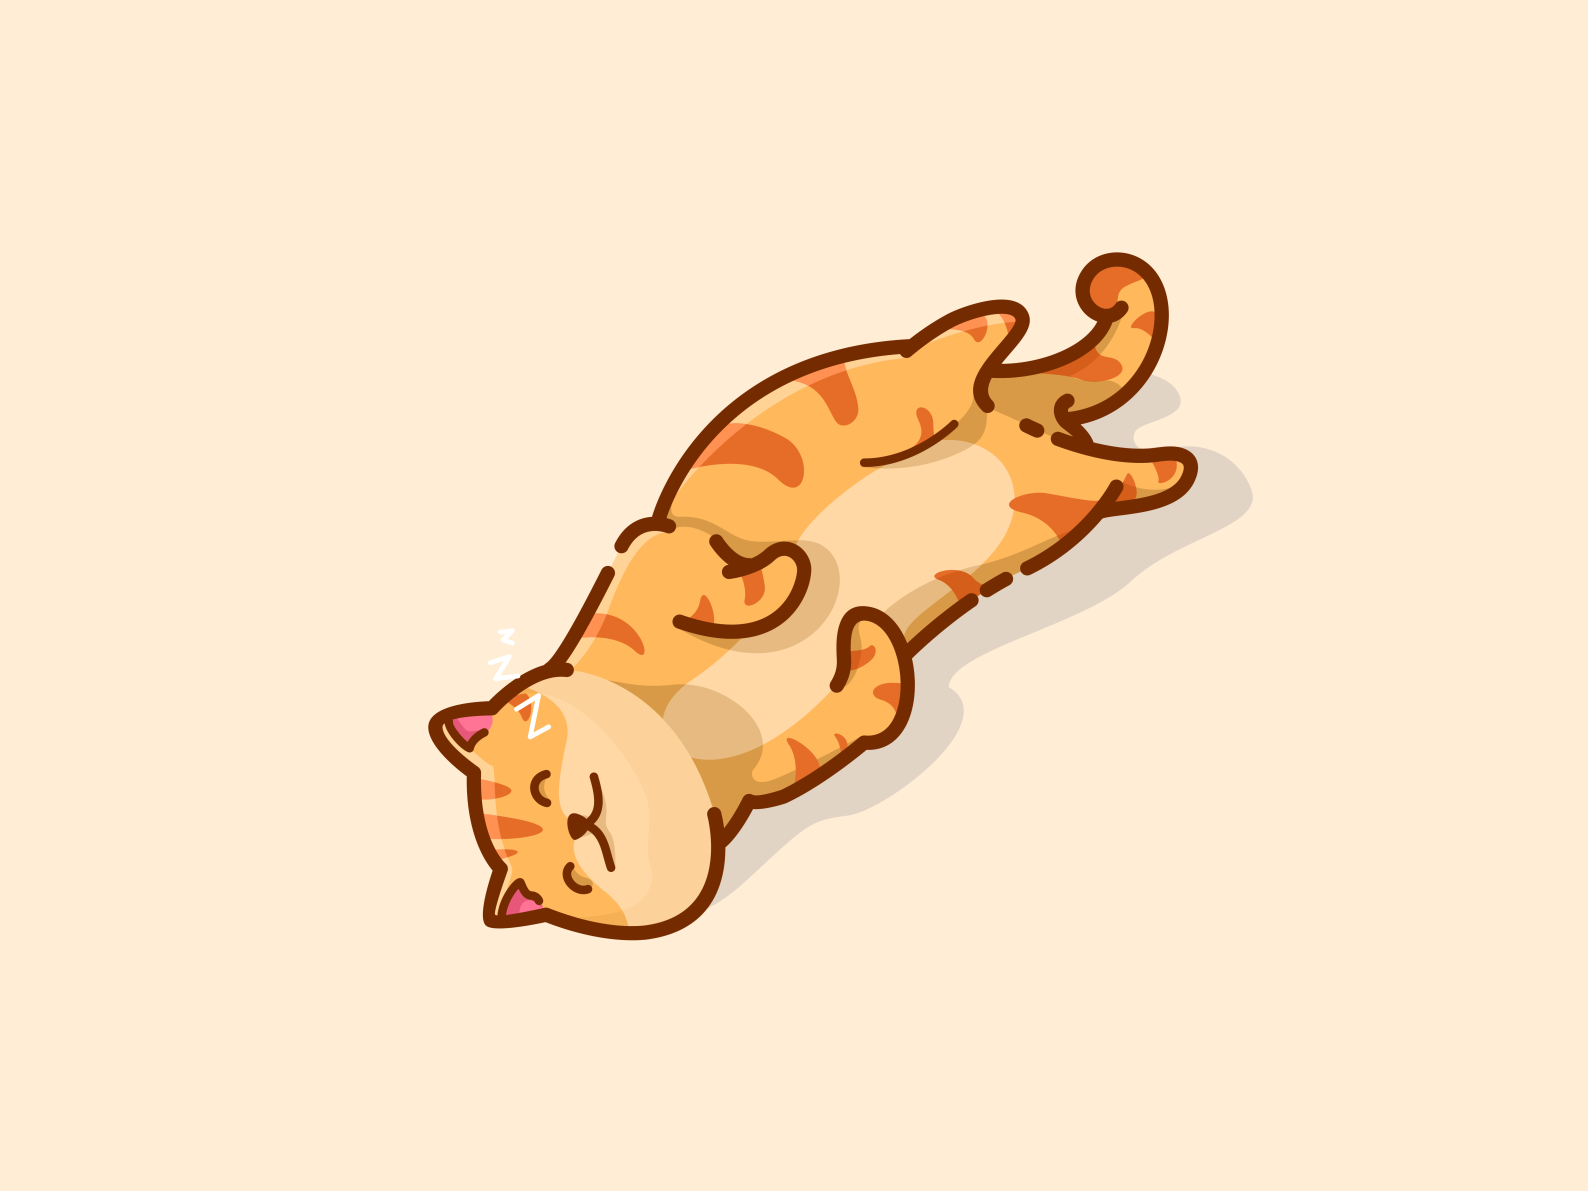 Happy Sleepy Cat by Ard on Dribbble